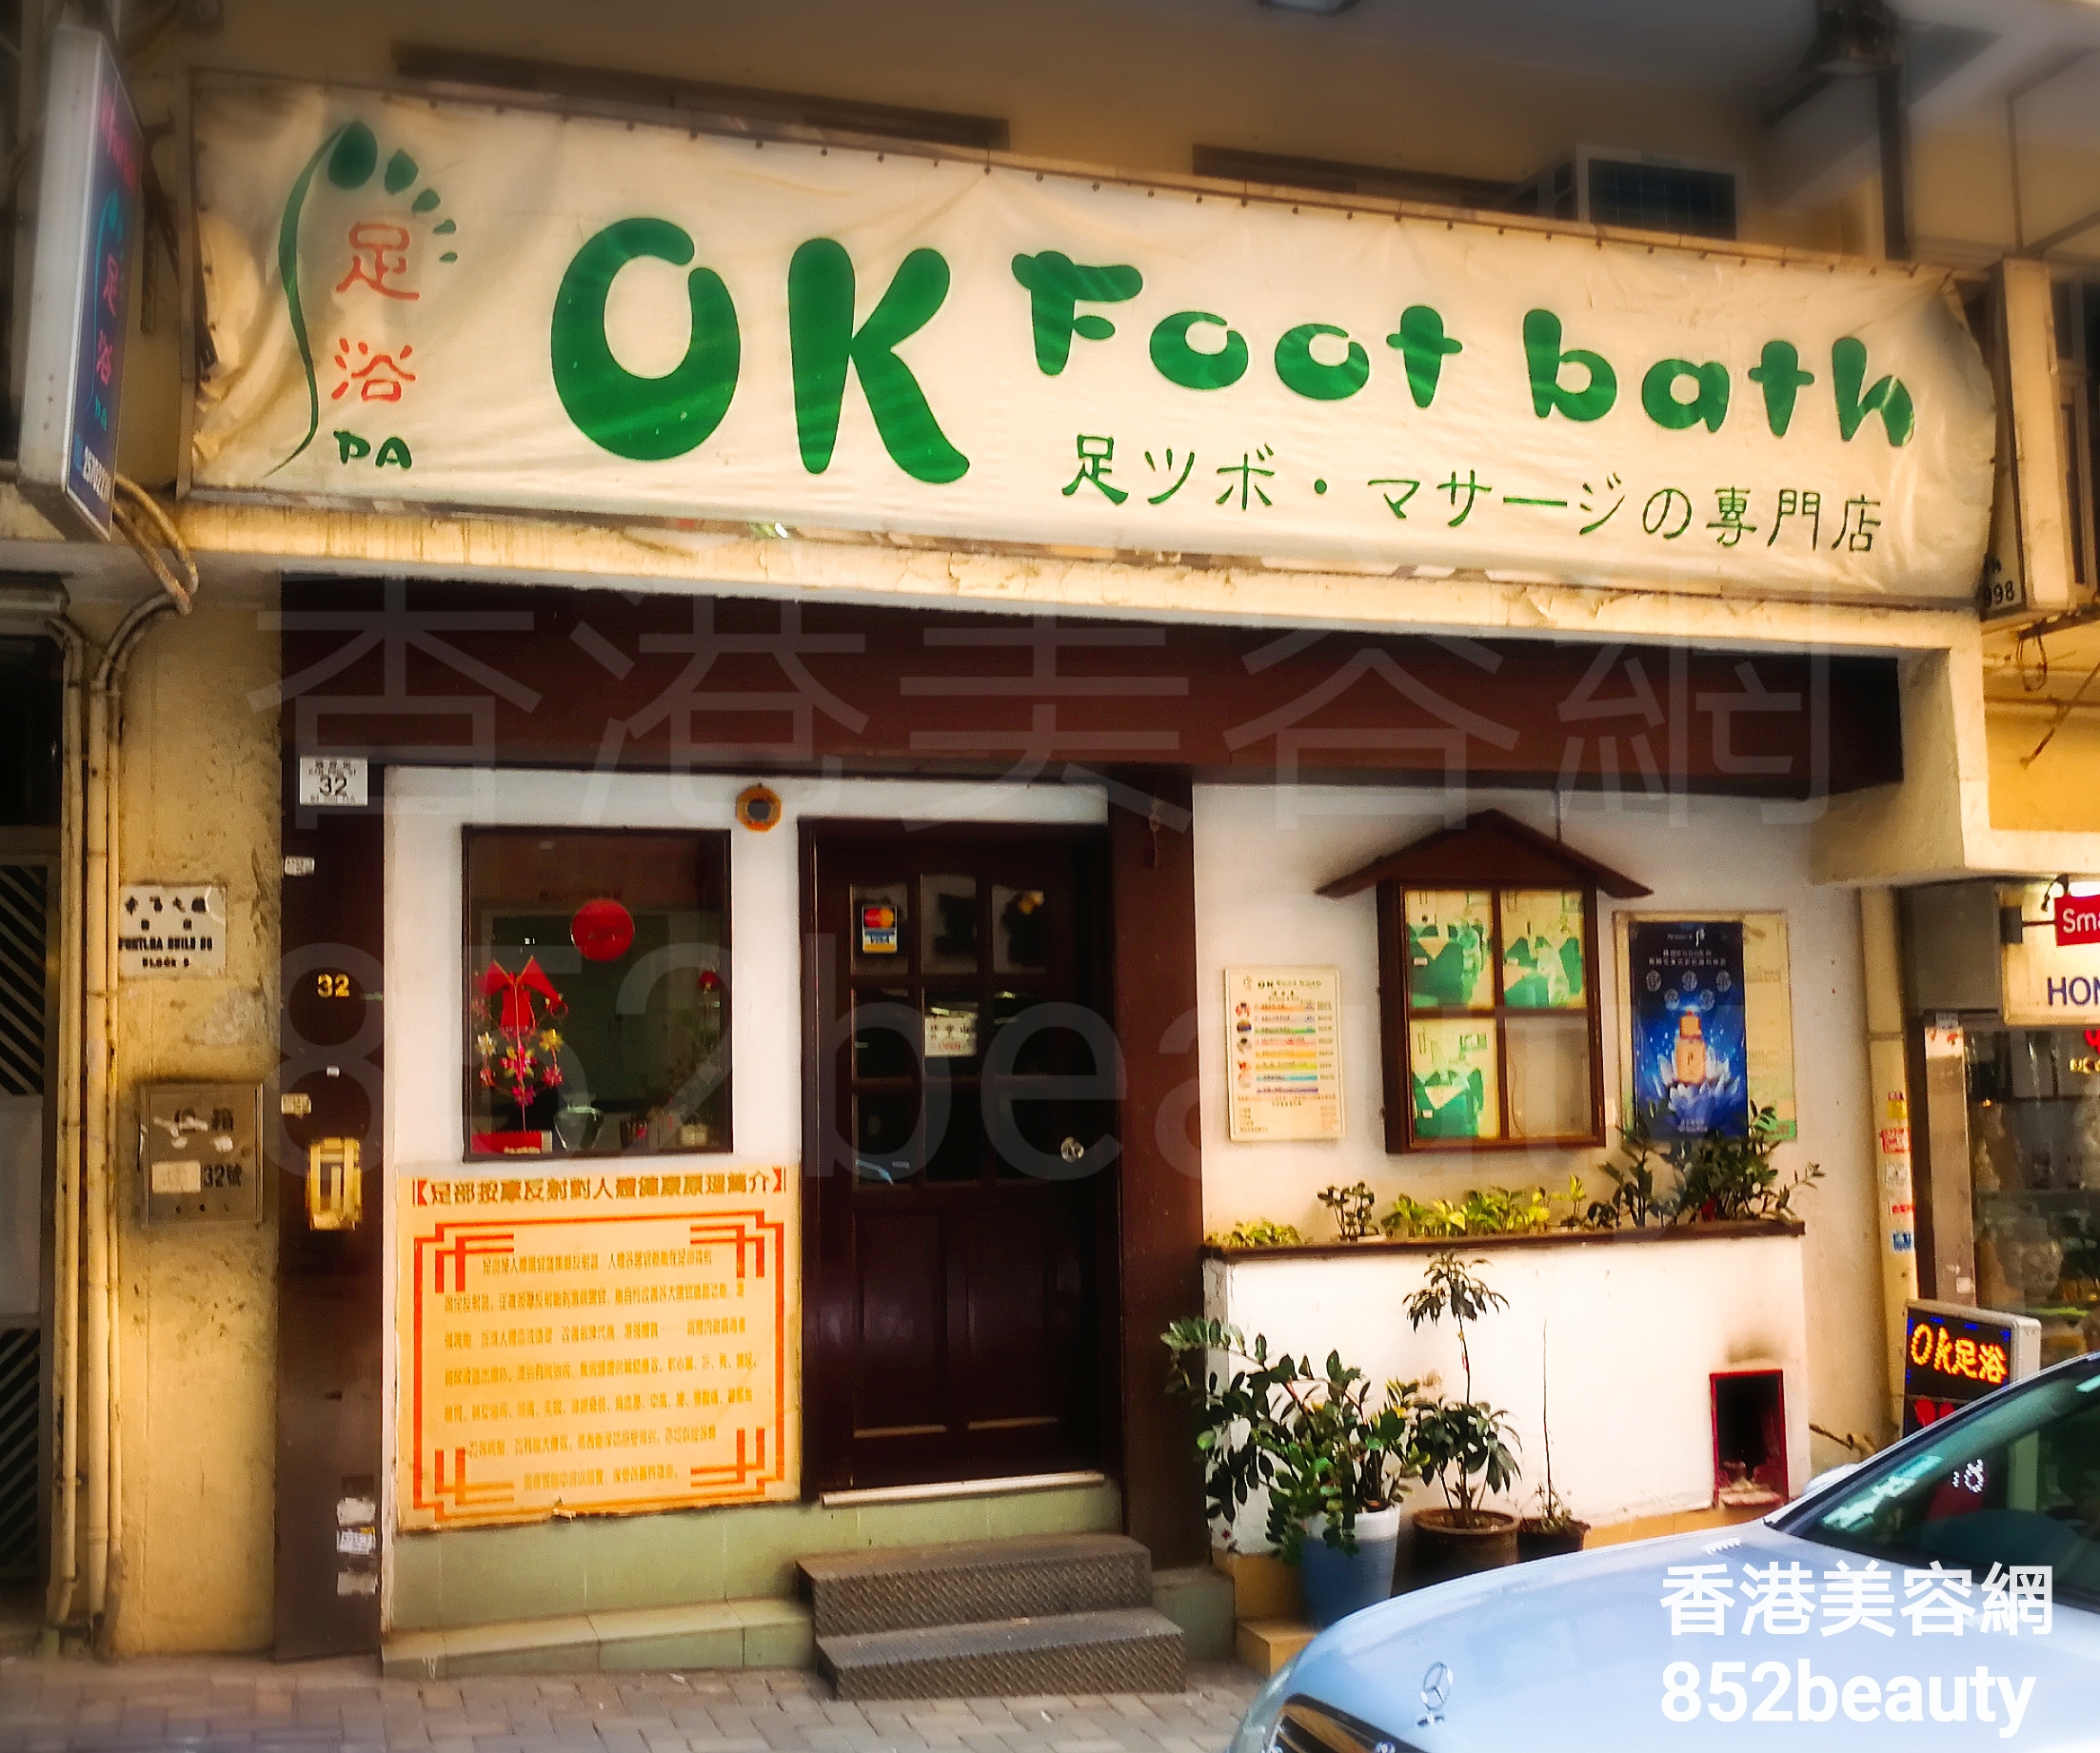 美容院: OK Foot bath